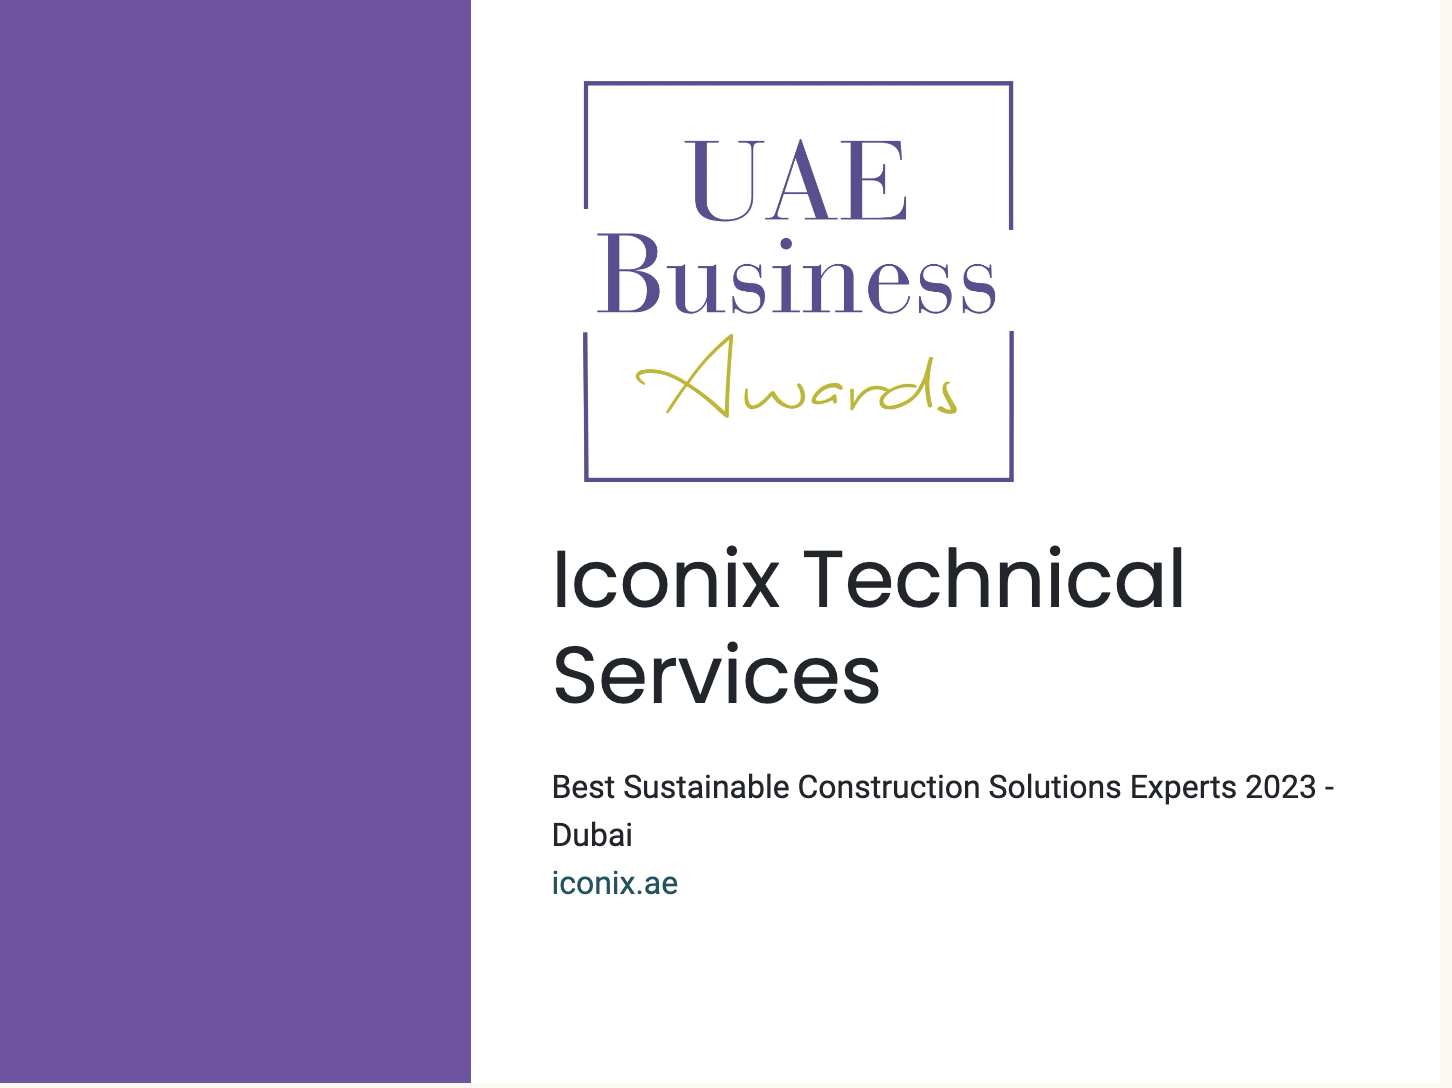 Best-Sustainable-Construction-Solutions-Expert-2023-UAE-Business-Awards-2023-Dubai